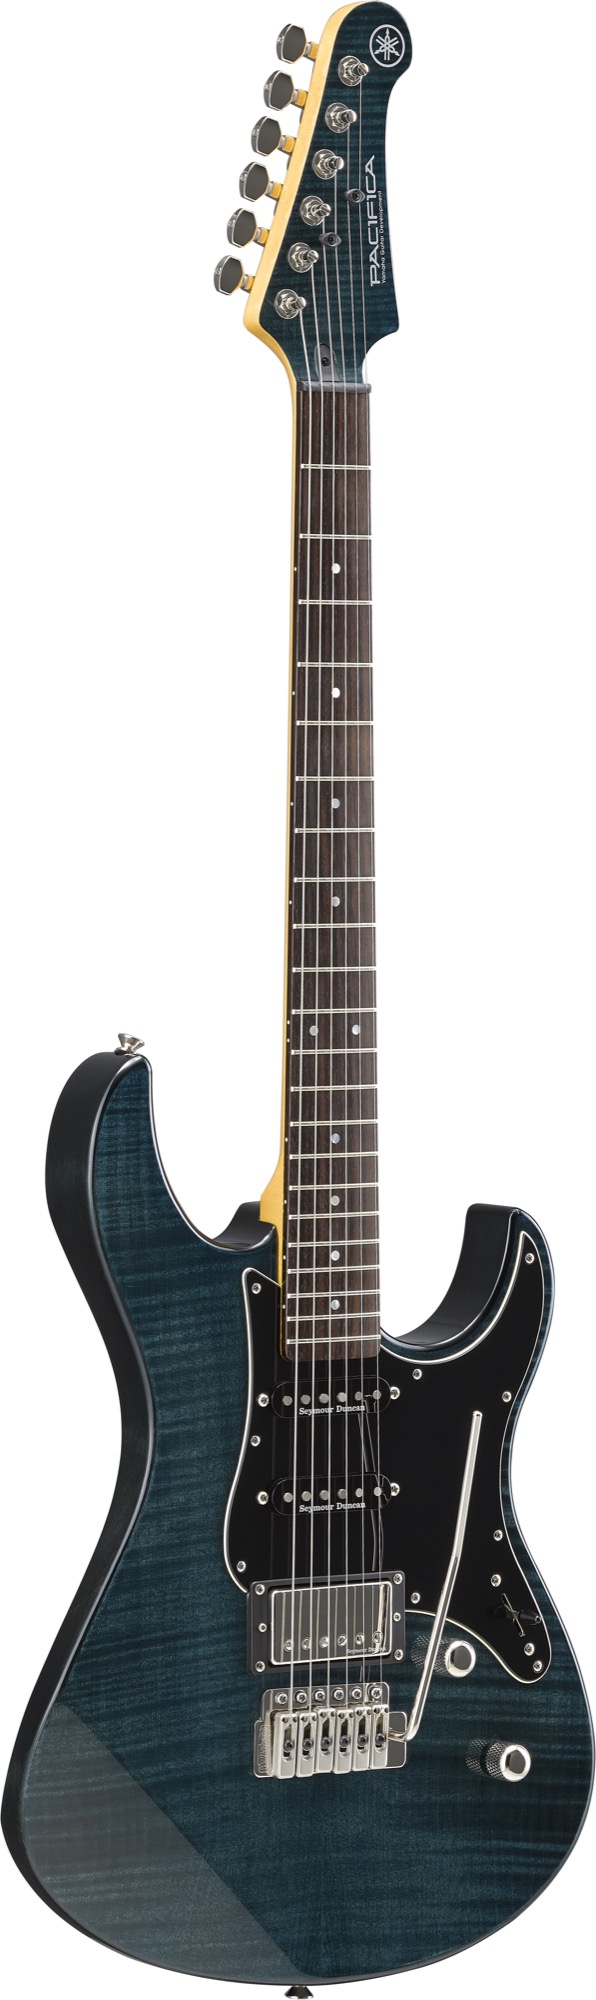 Pacifica 612V FM Mk II Electric Guitar In Indigo Blue Finish with Flamed  Maple Top & Black Scratchplate